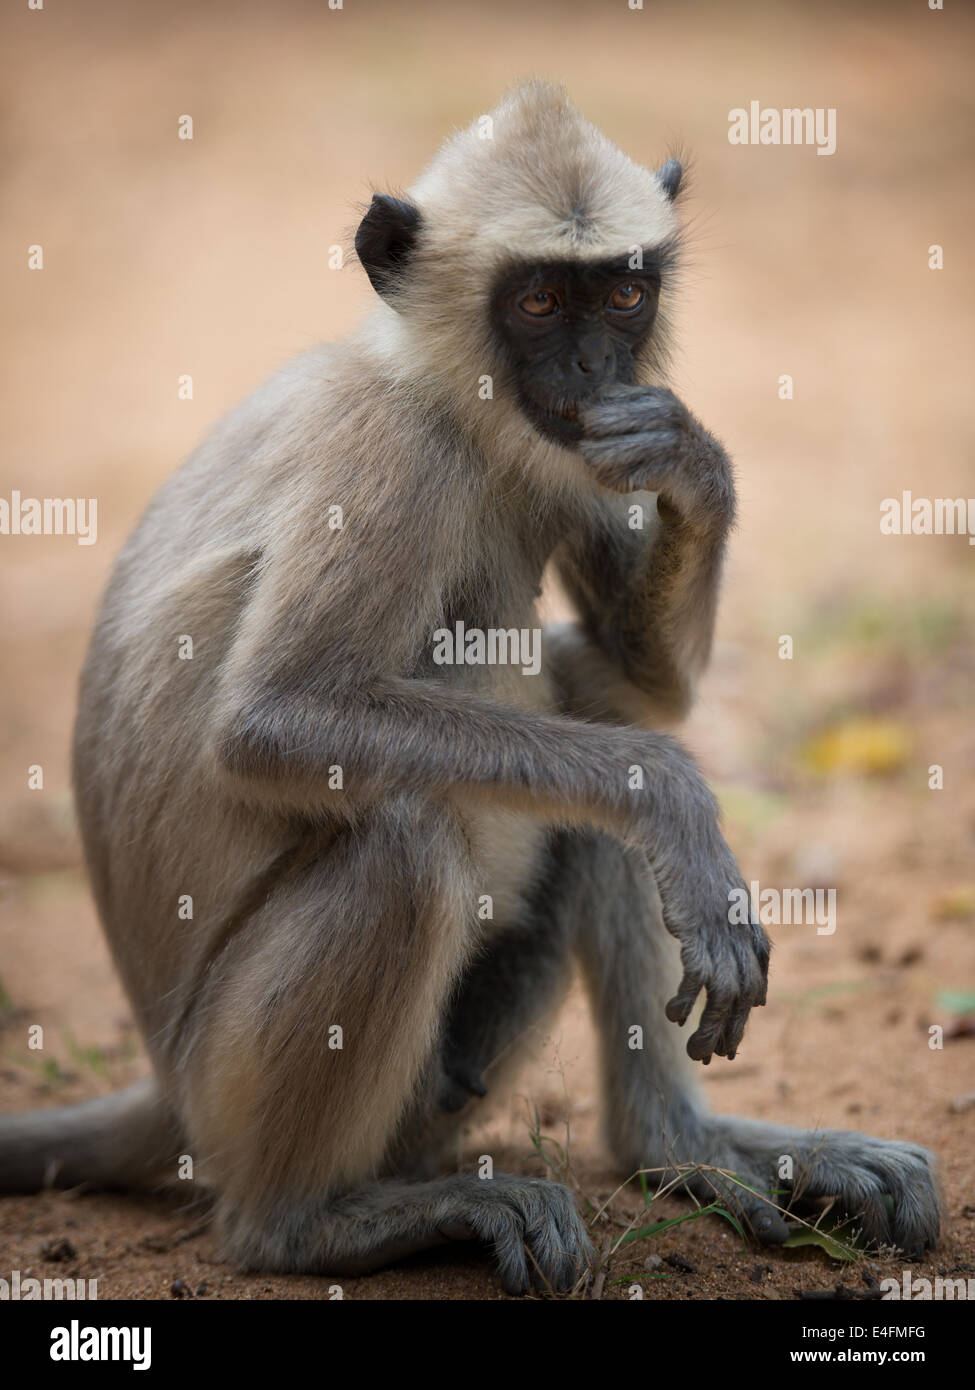 Grey macaque monkey at Yala National Park Stock Photo